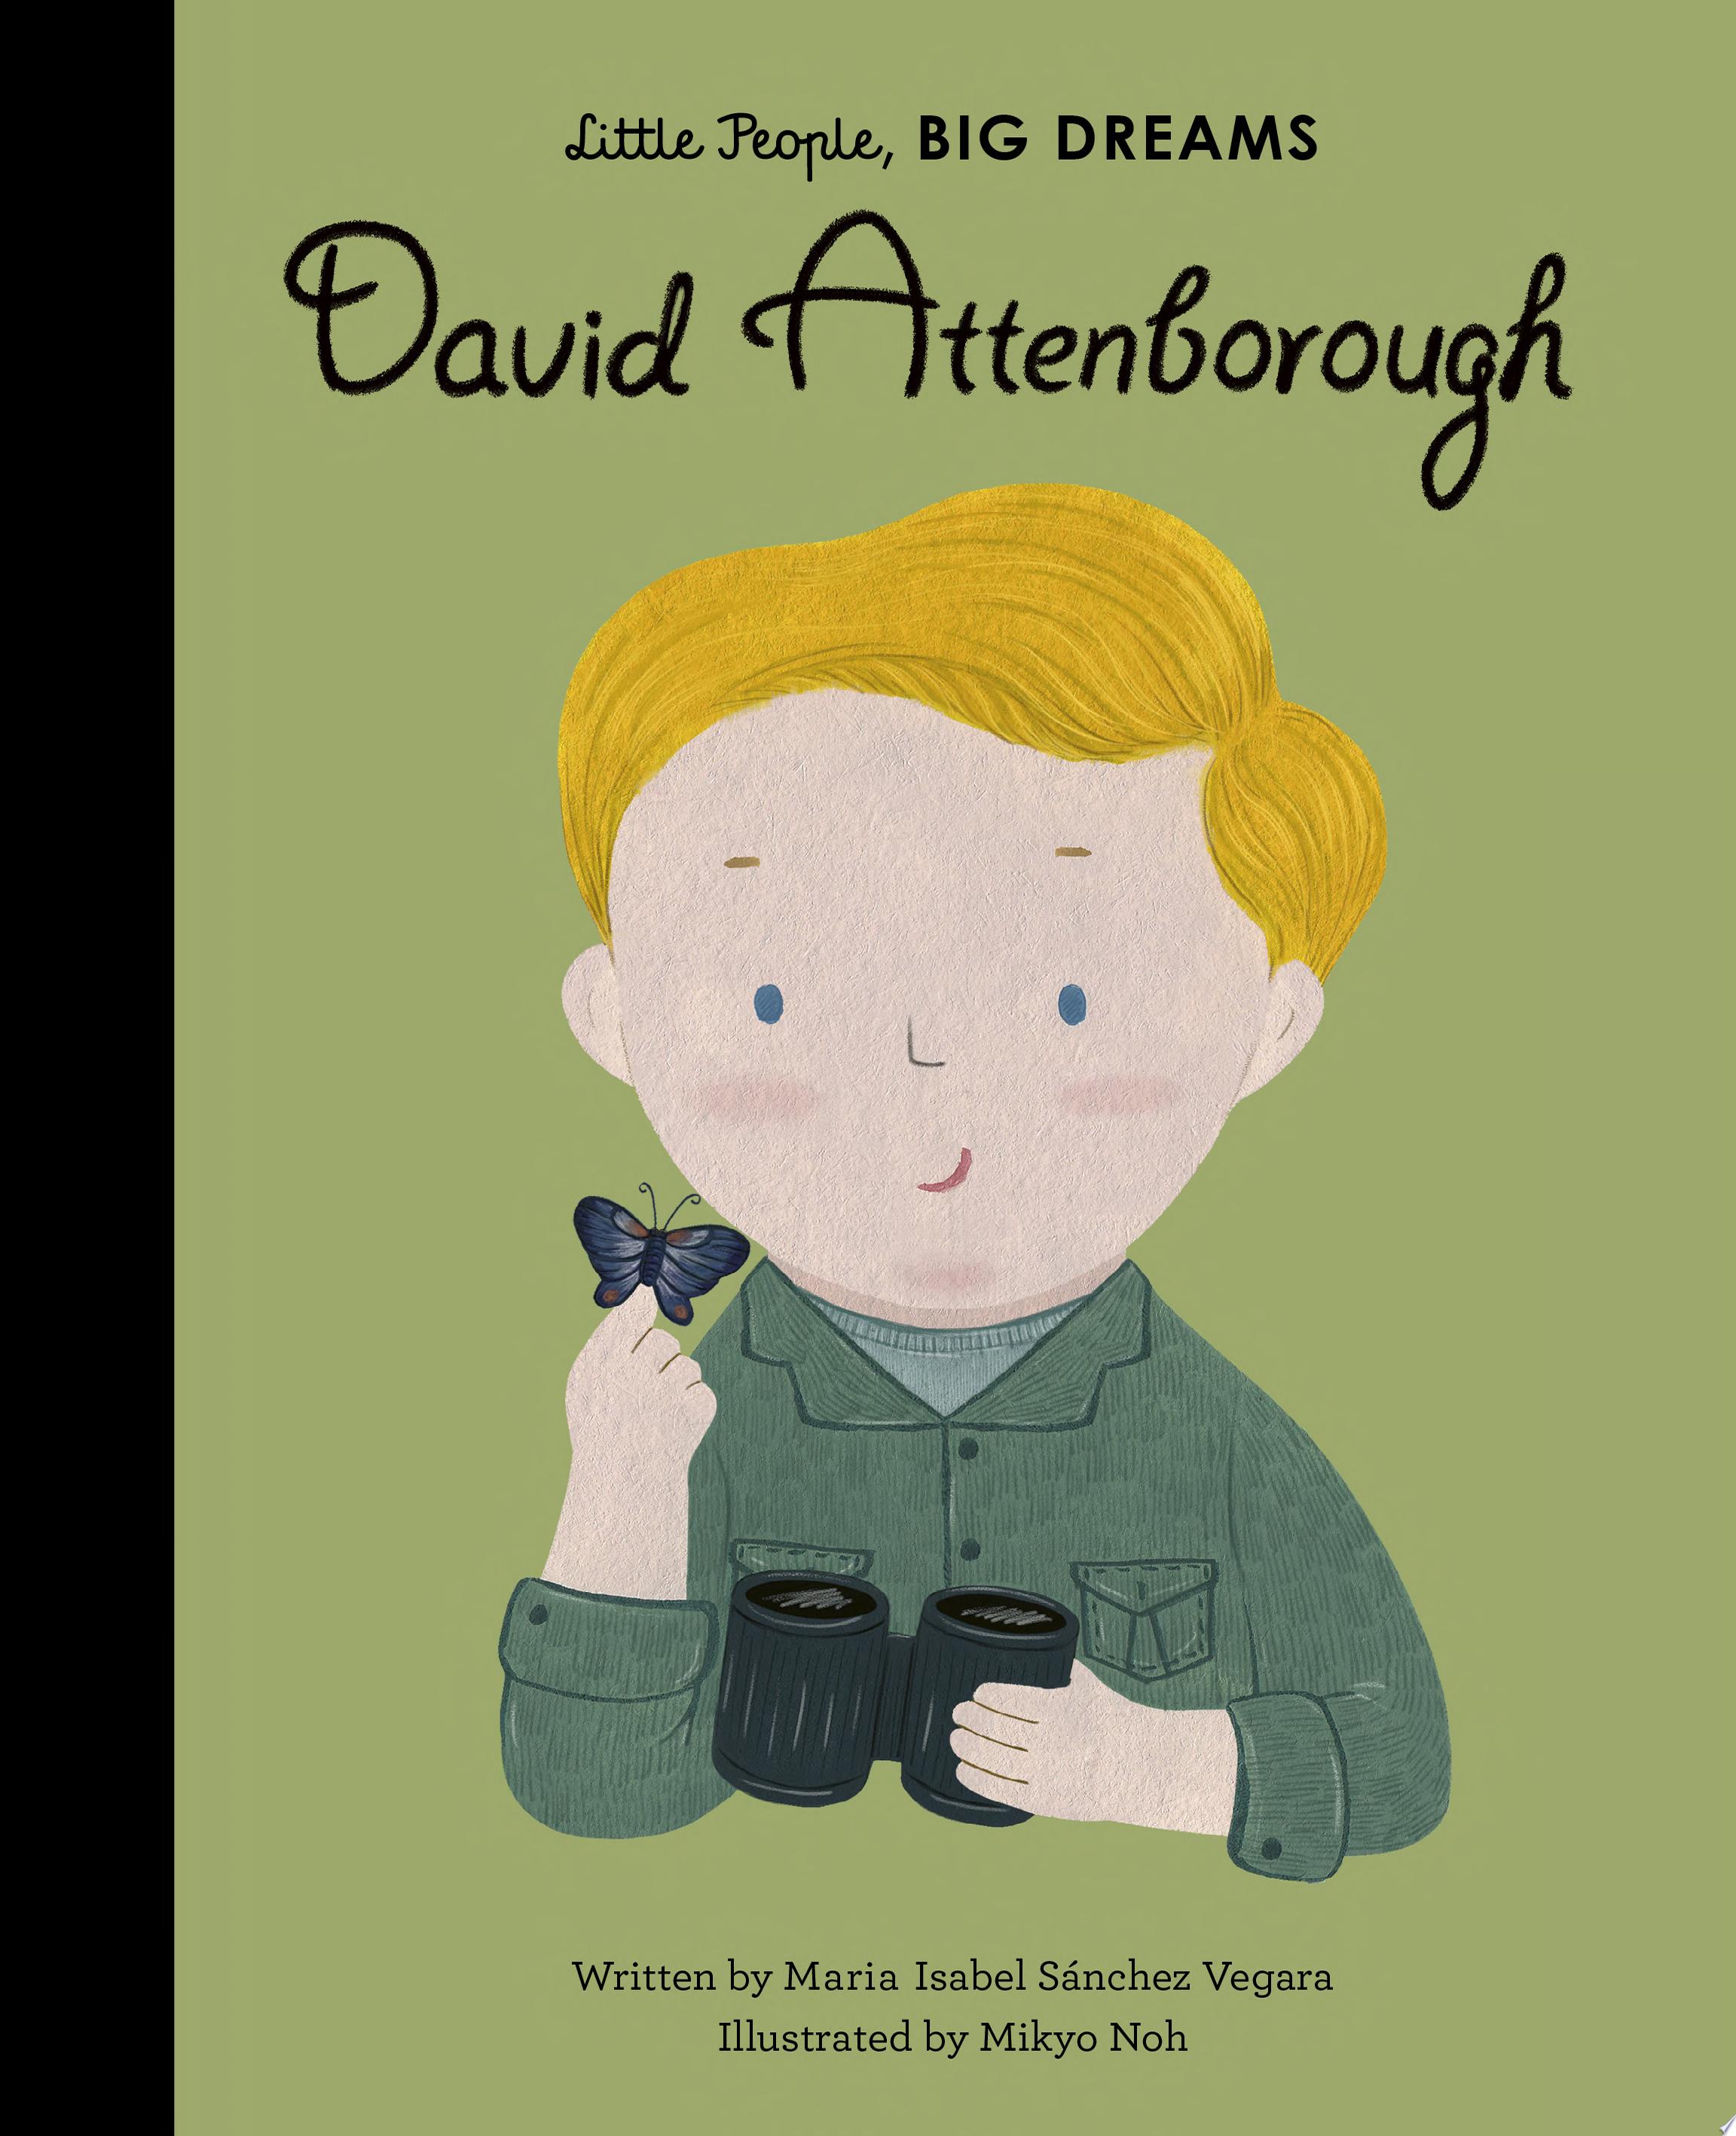 Image for "David Attenborough"